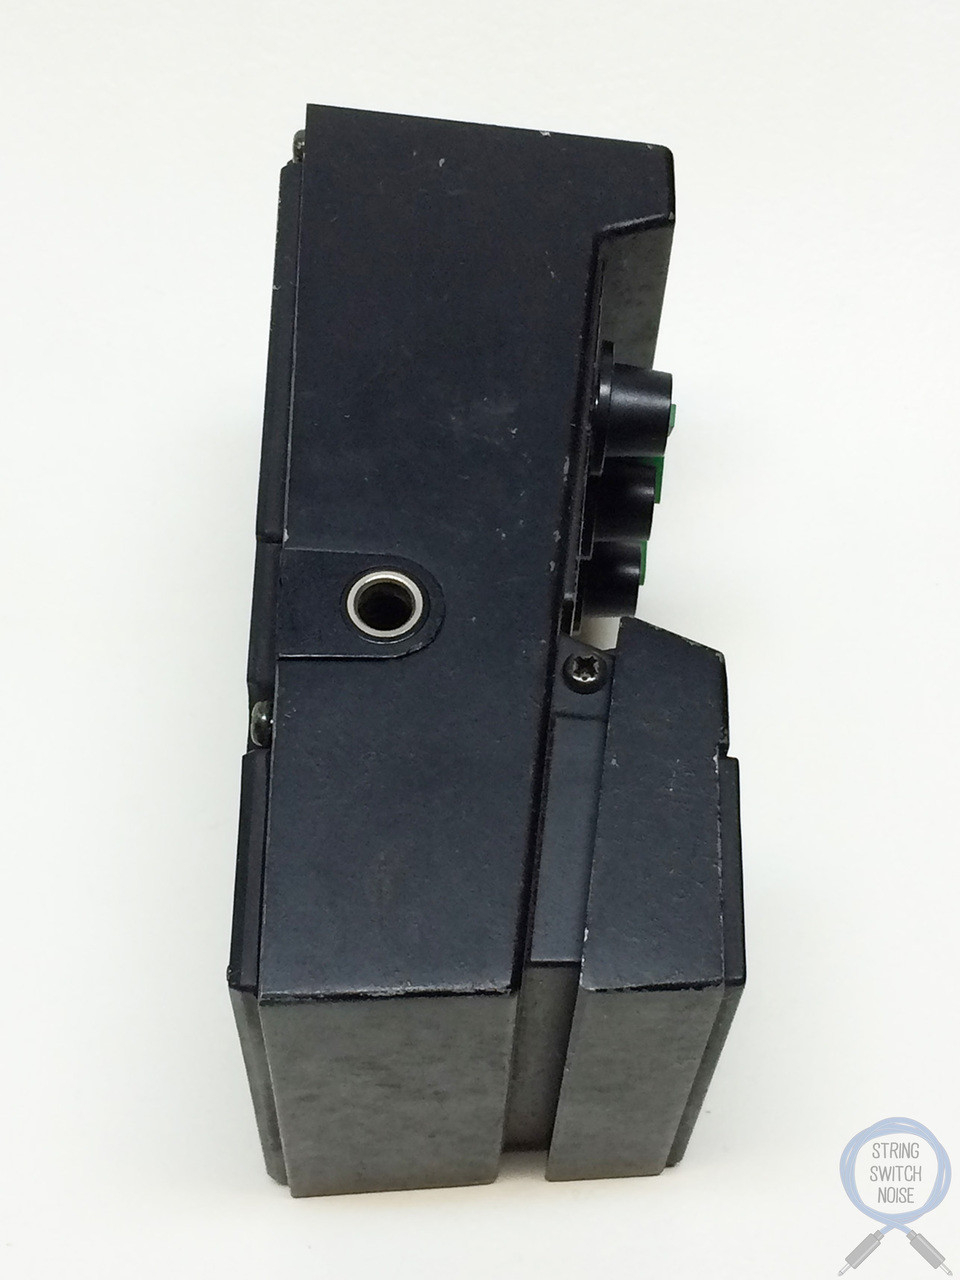 Yamaha DDS-20M, Digital Delay Sampler, Made In Japan, 80's, Guitar Effect Pedal